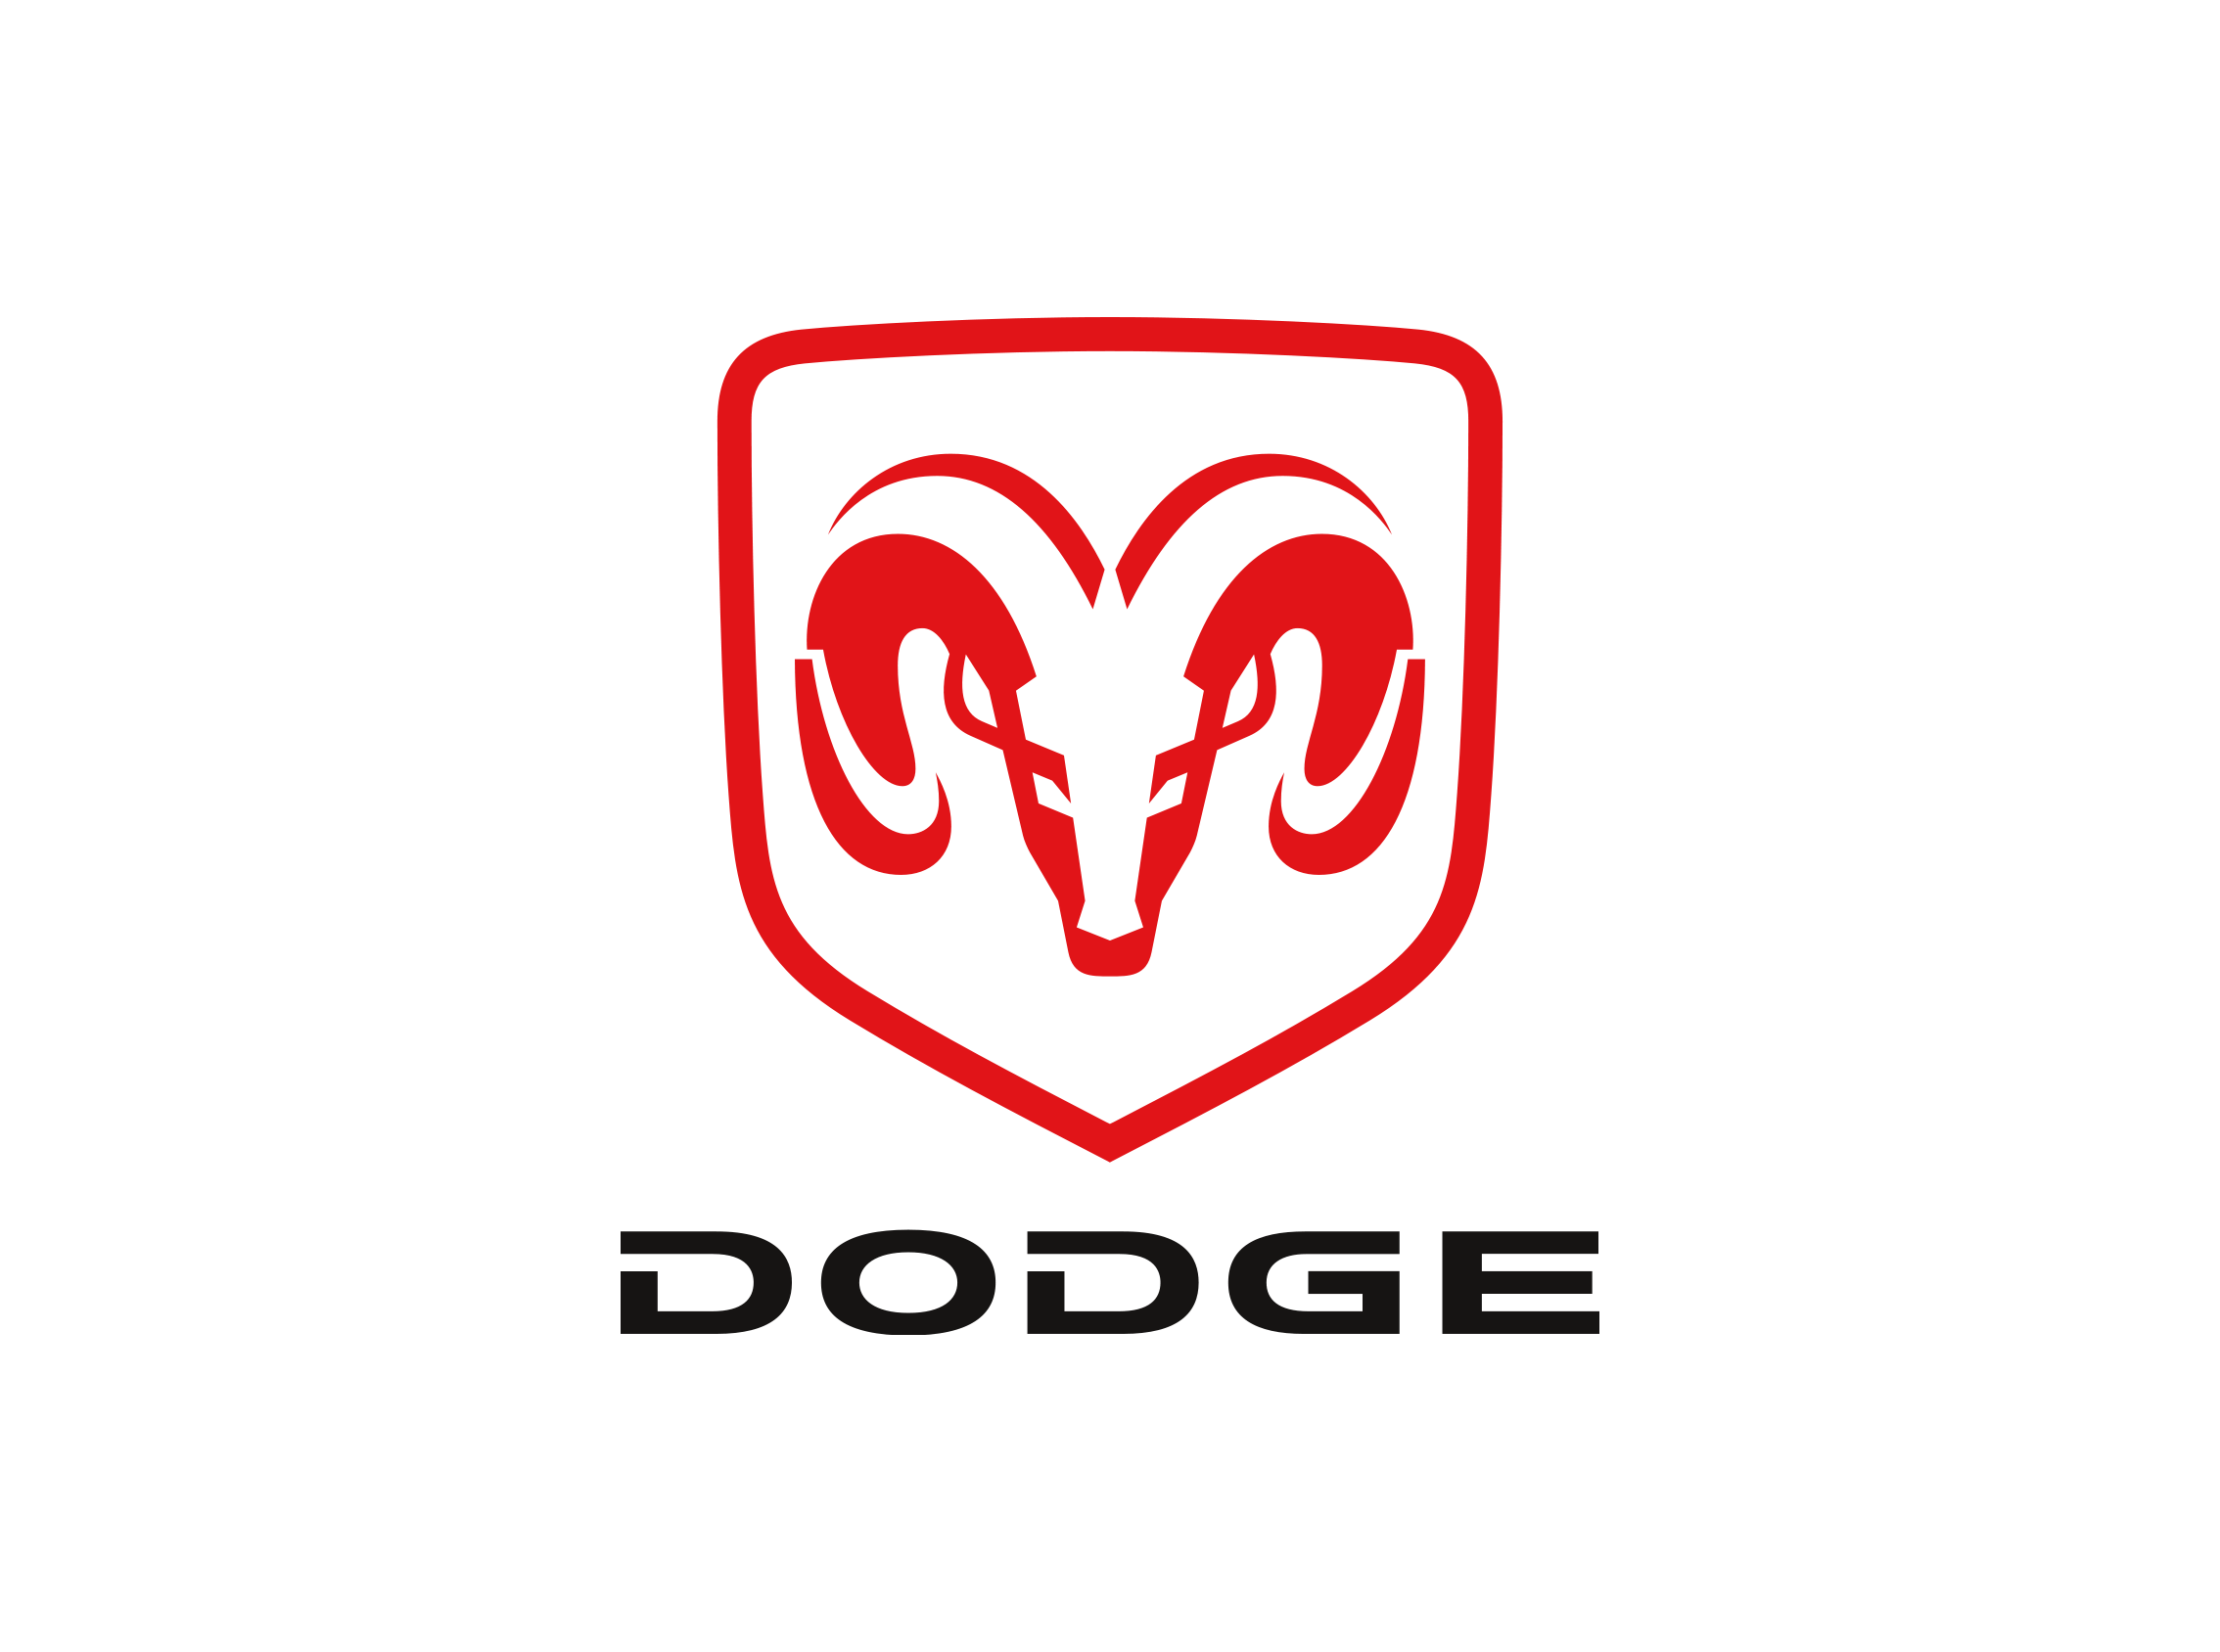 Dodge Truck Logo - Dodge Truck Logo | About of logos